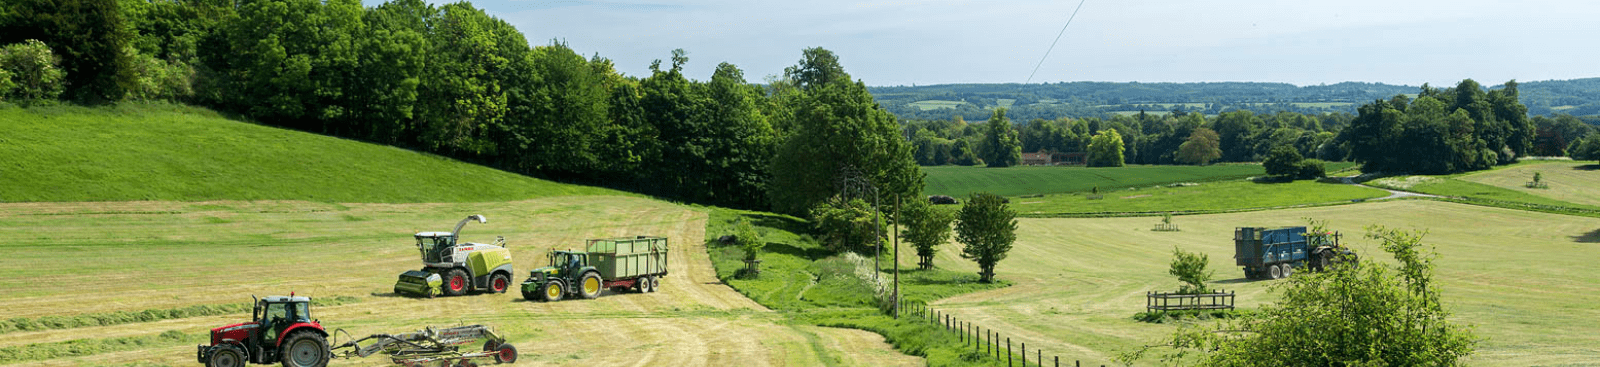 Farm vehicles in green fields in Chevening Estate